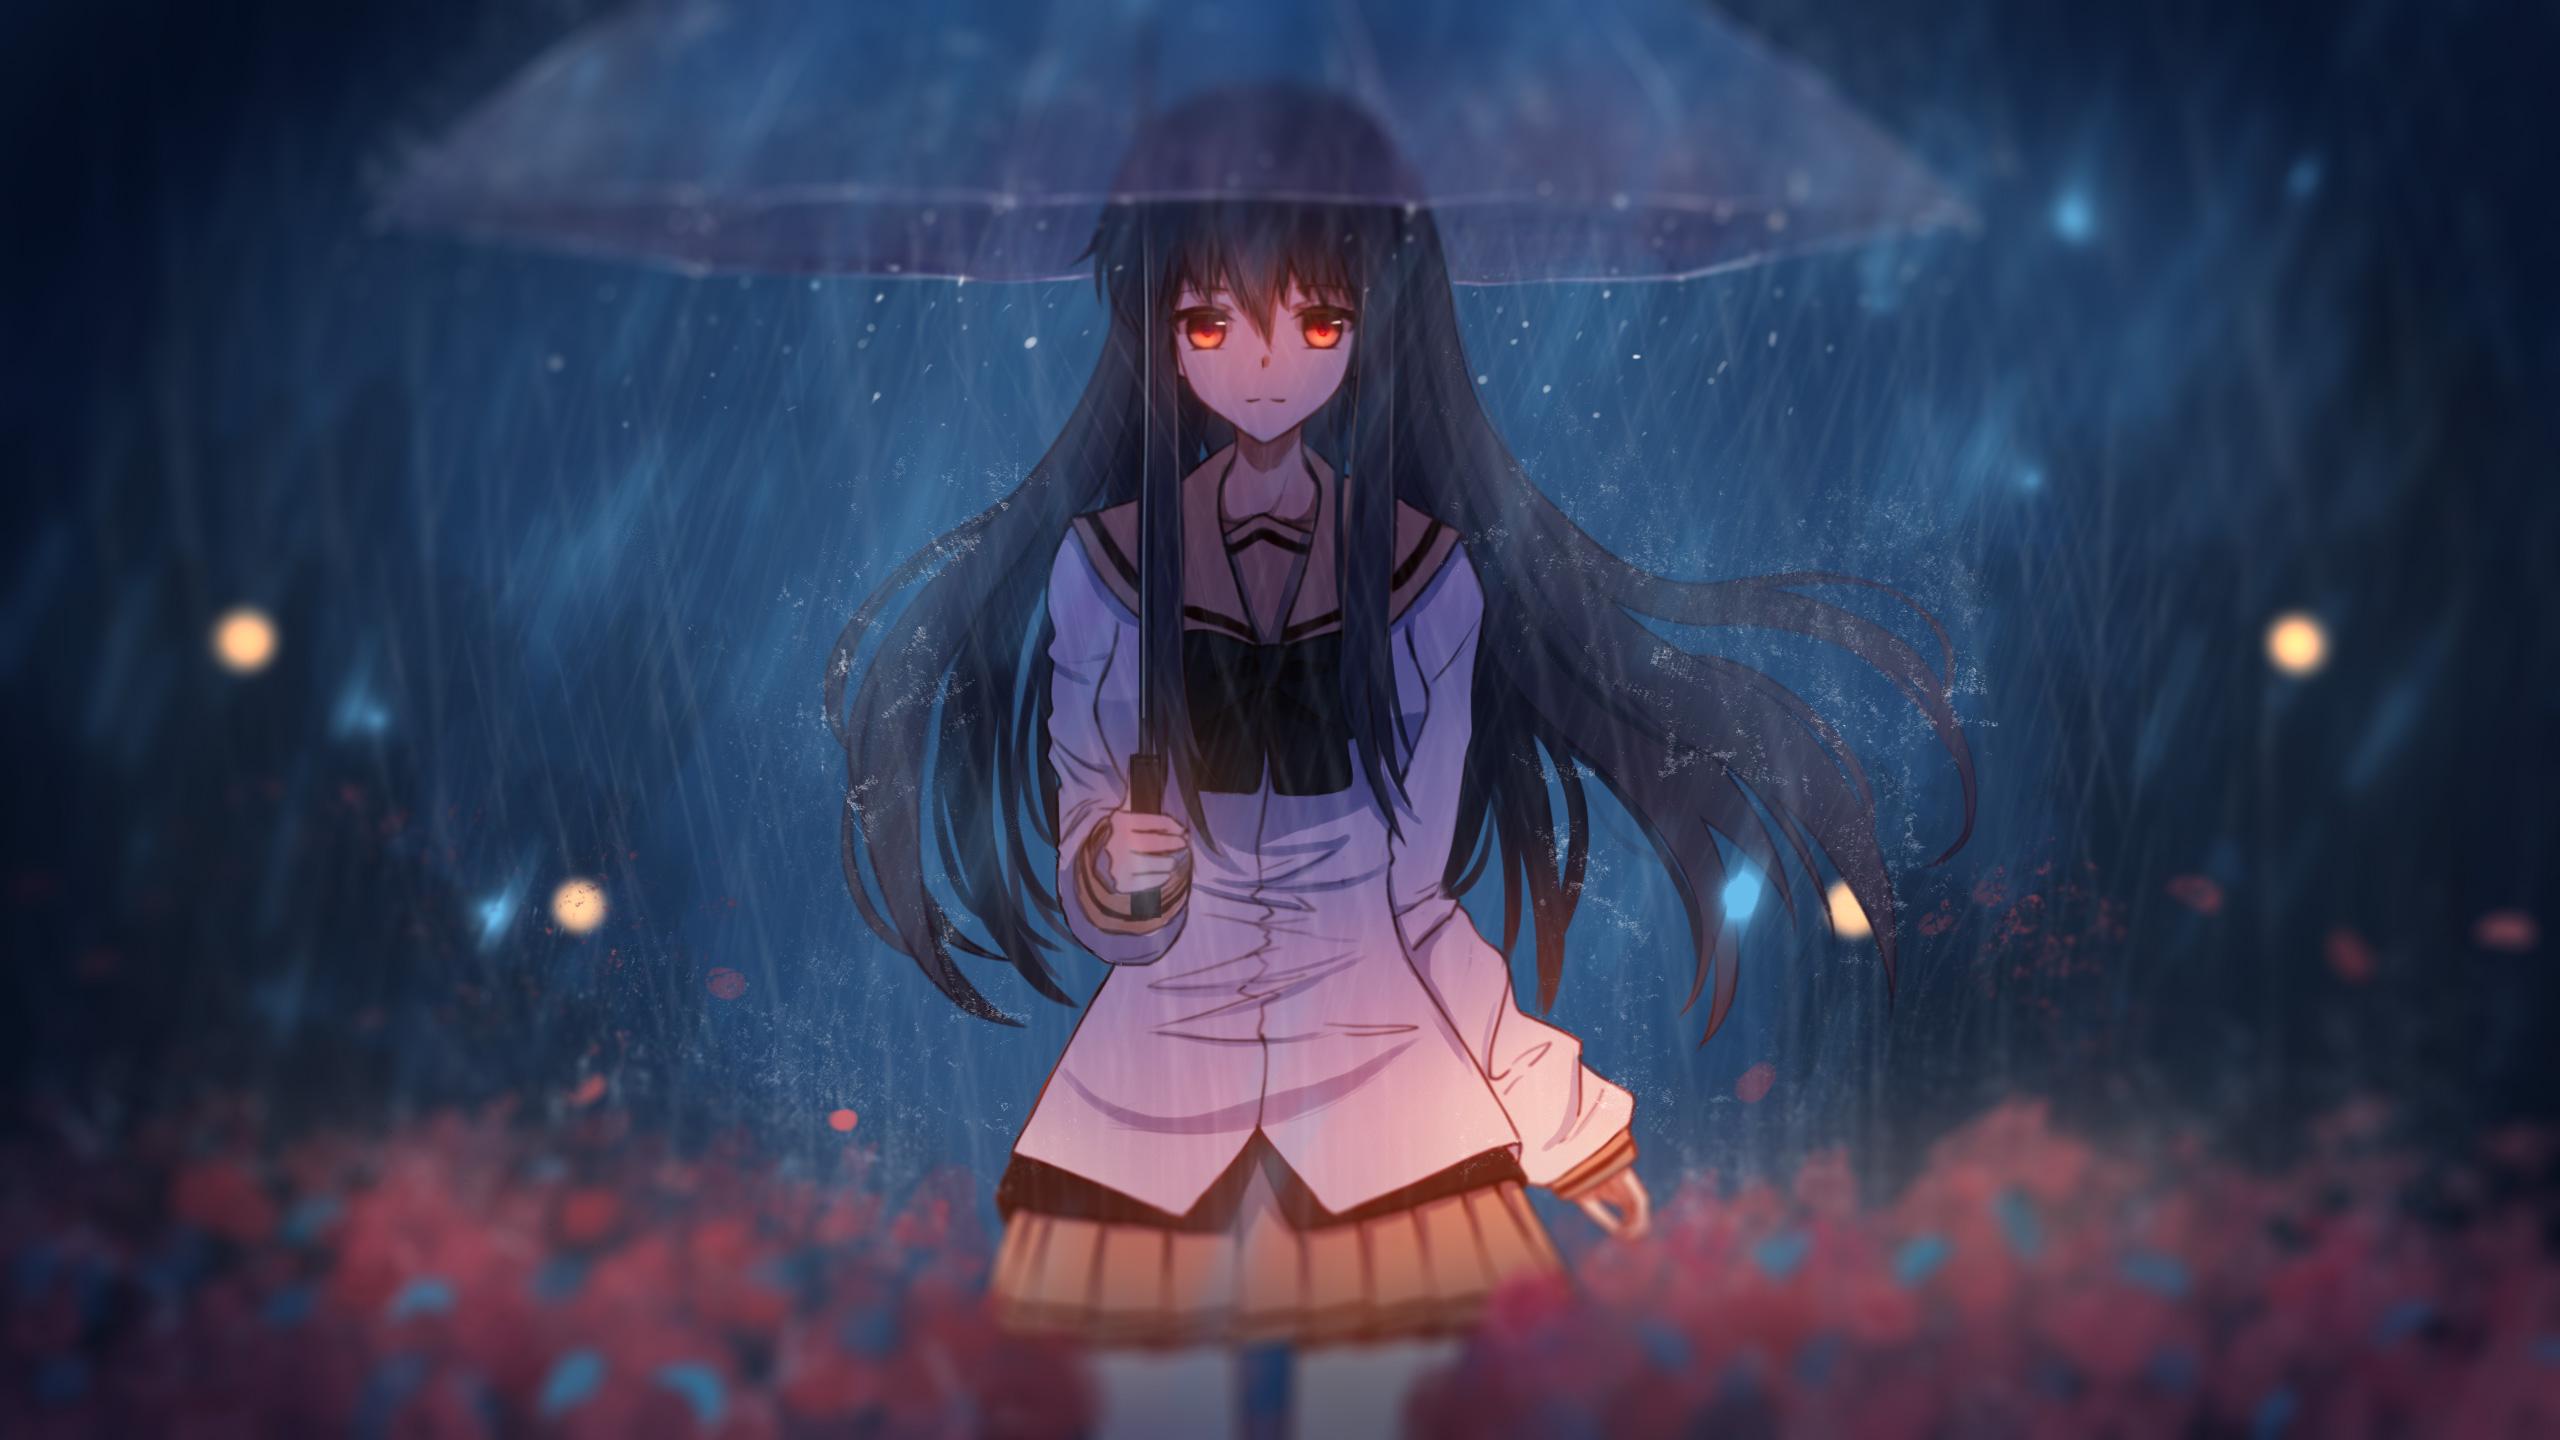 Anime Girl With Umbrella Art, HD Anime, 4k Wallpaper, Image